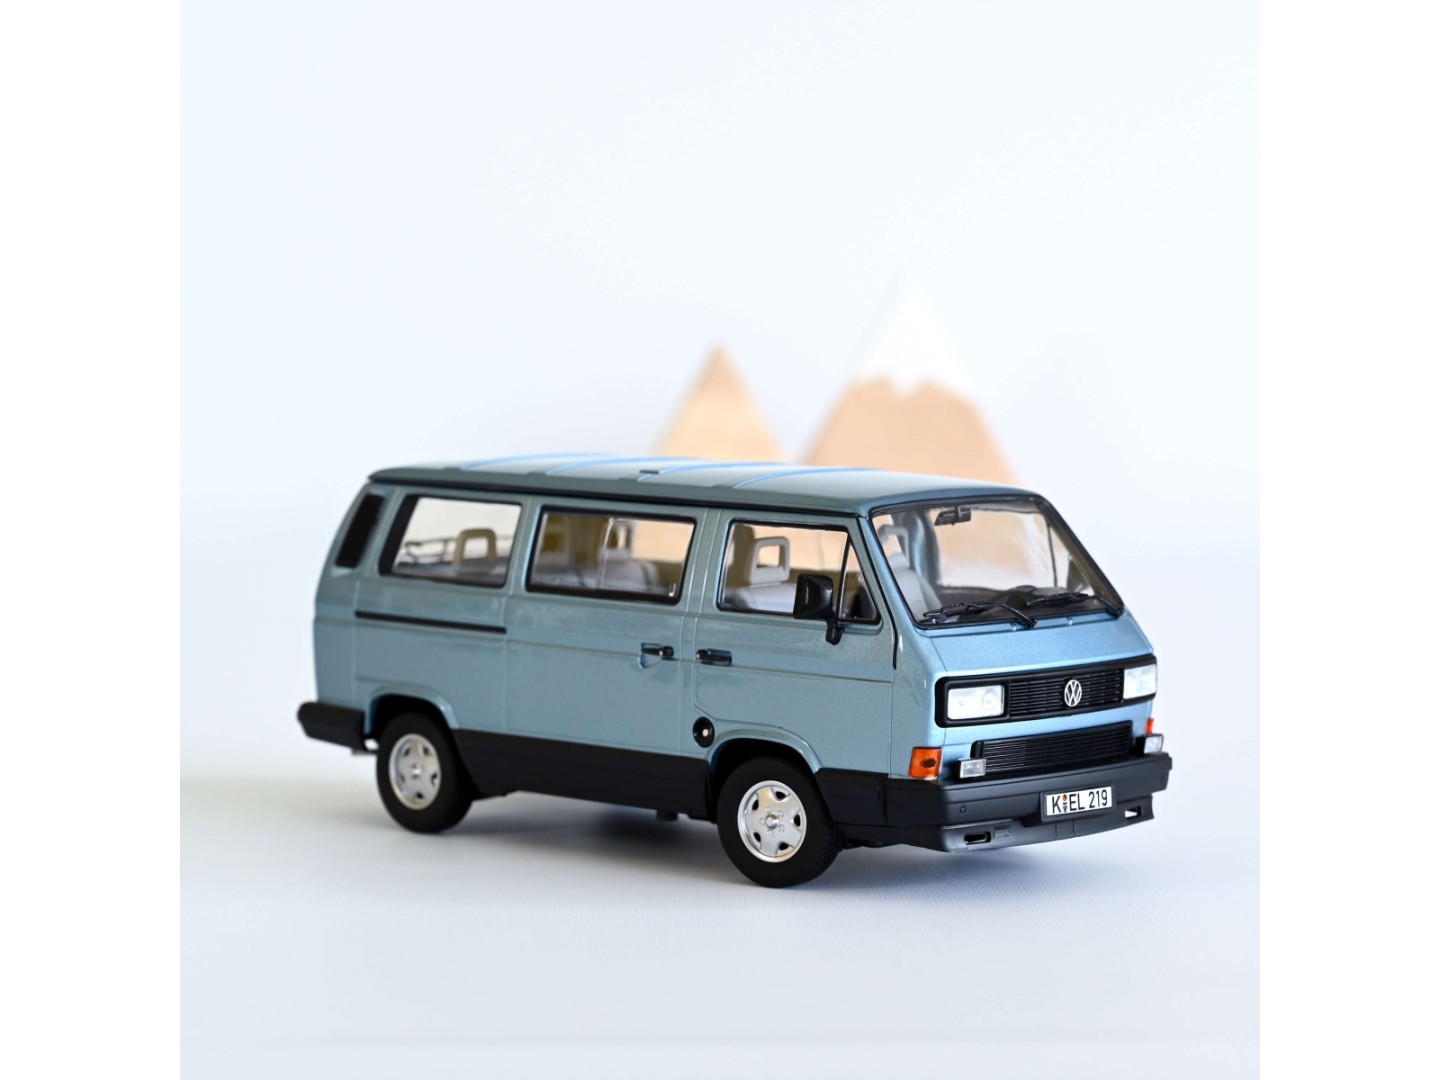 Marketplace - Volkswagen Multivan 1990 Bleu clair - Norev - 1:18